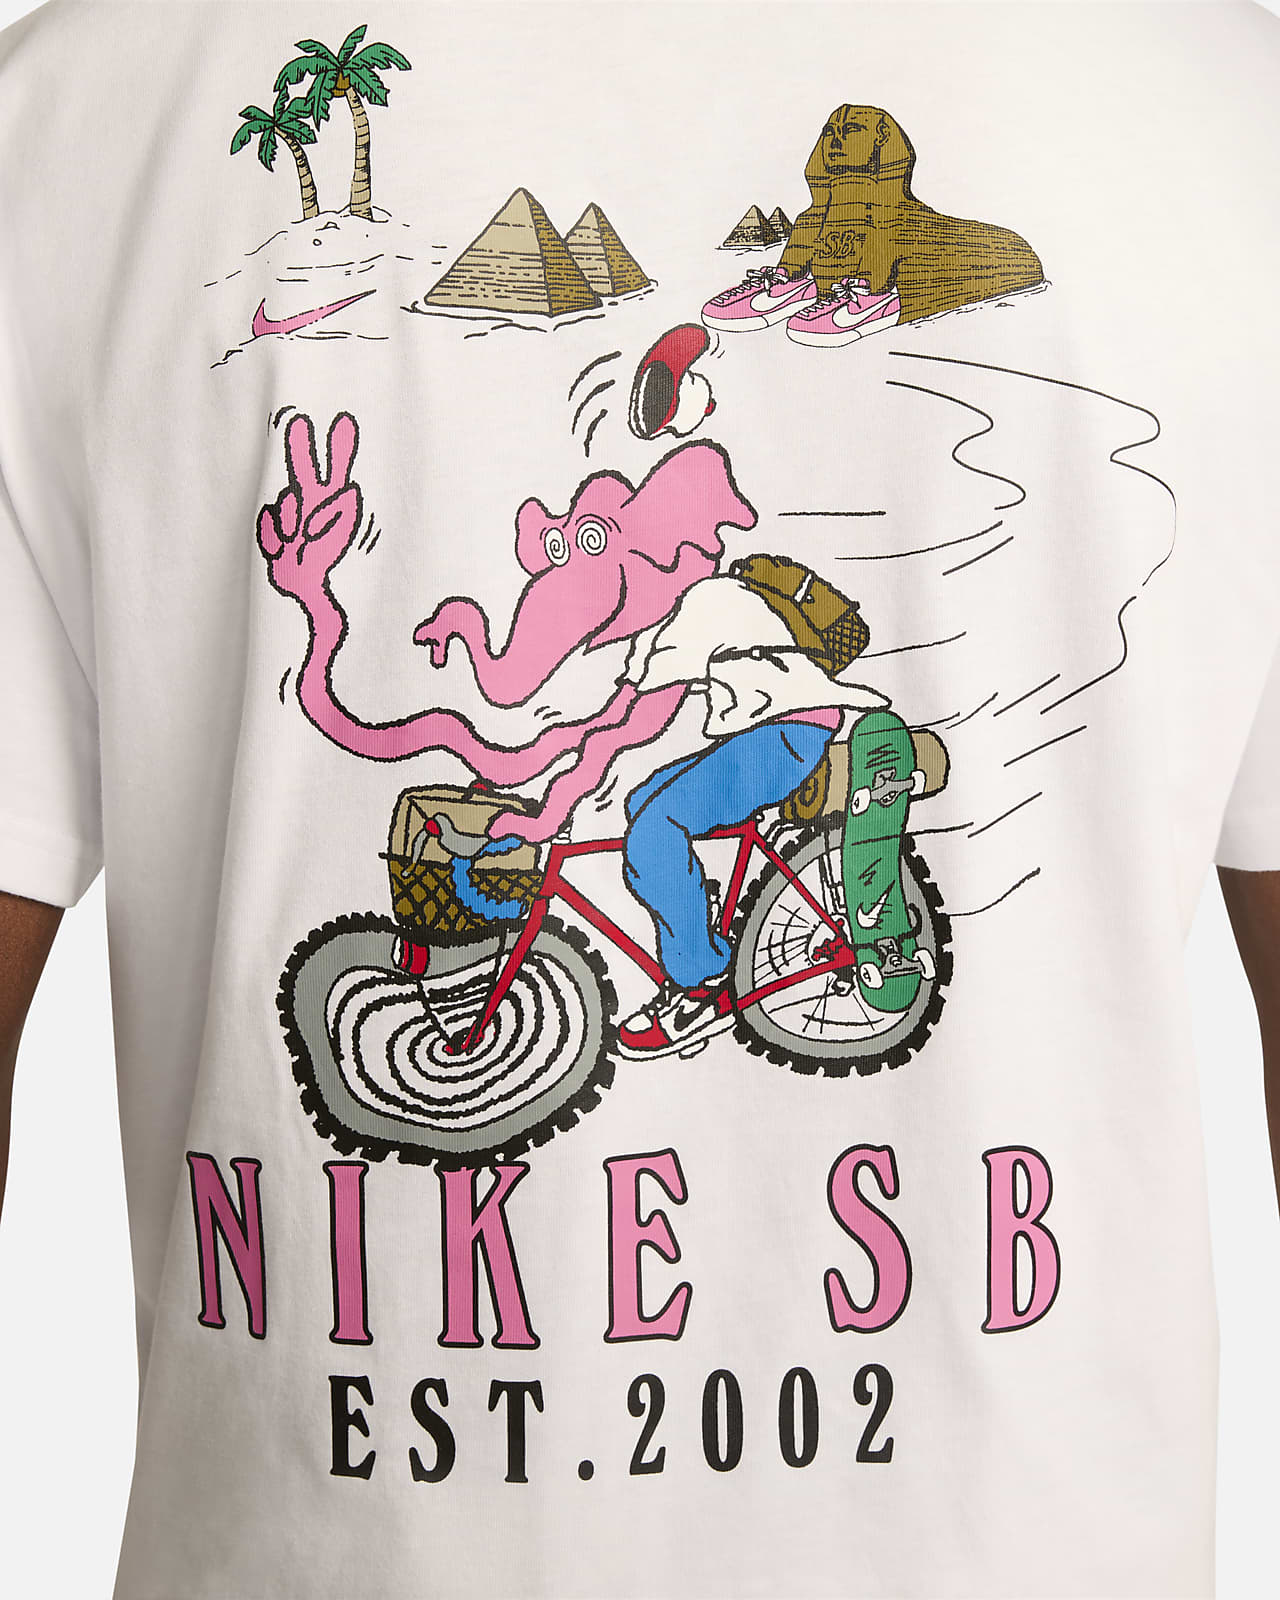 Nike SB Men's Skate T-Shirt.